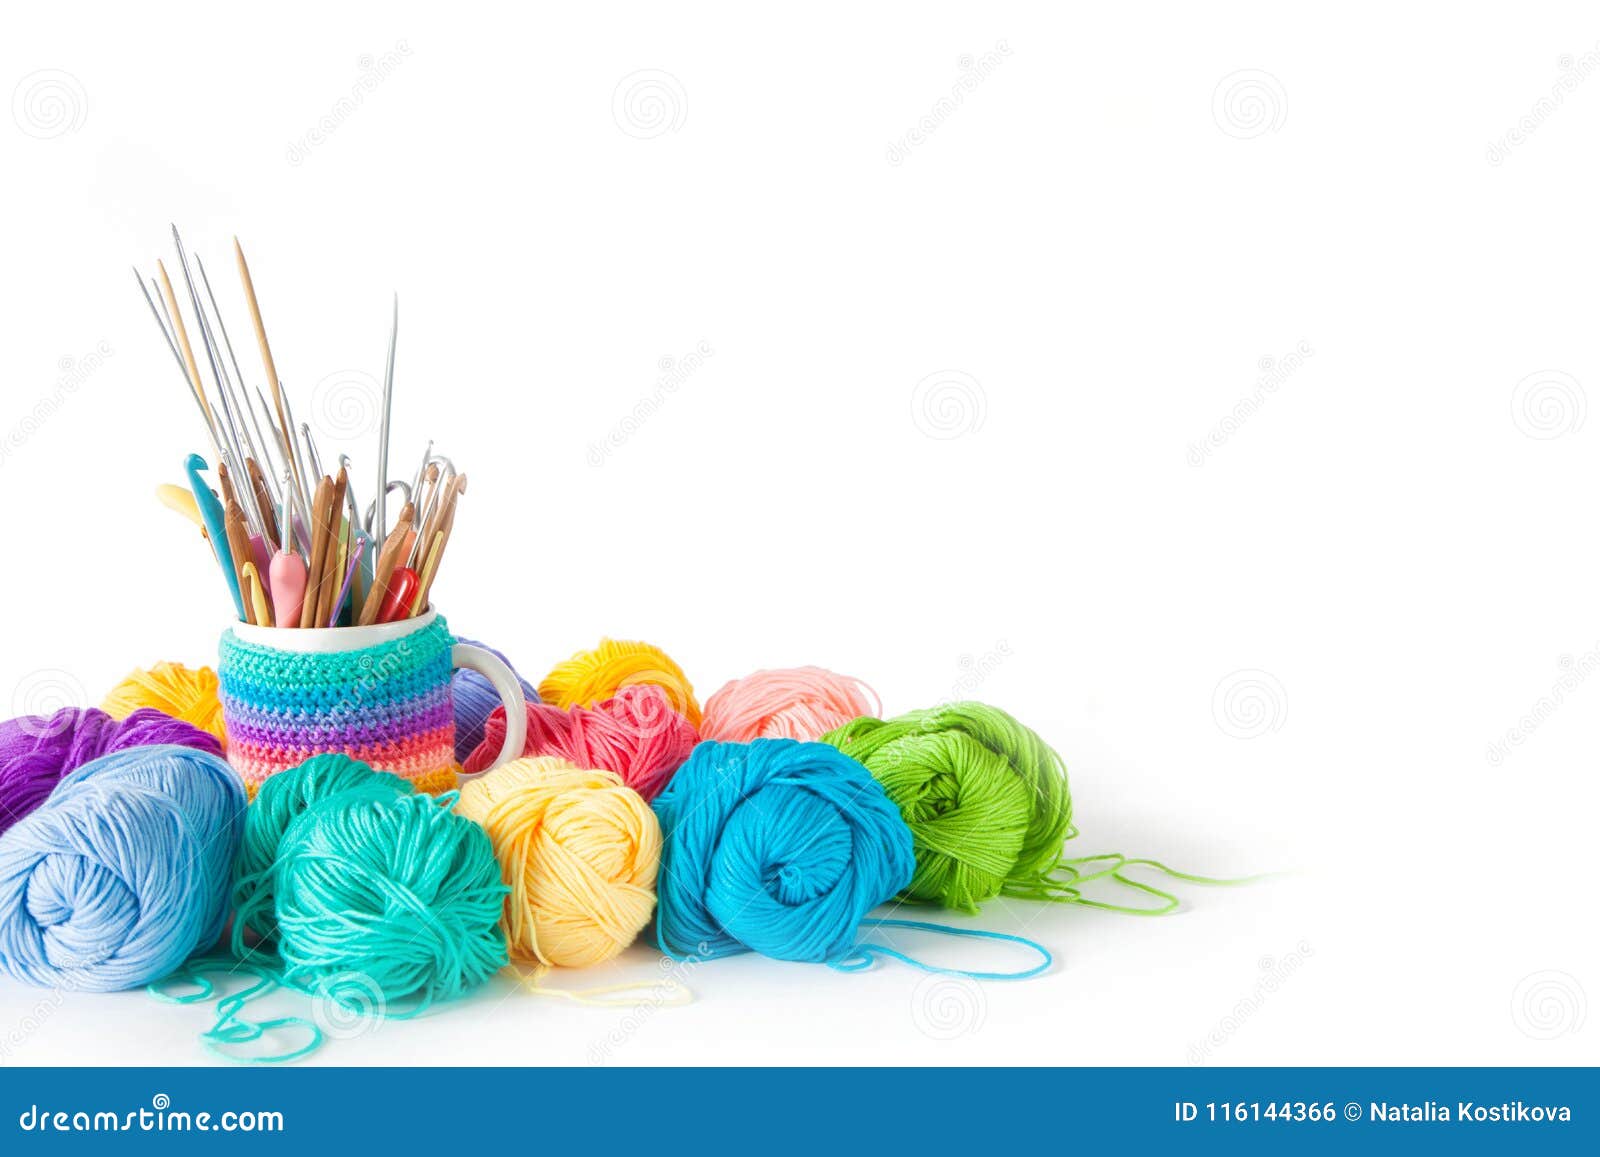 yarn balls for knitting and hooks, knitting needles.